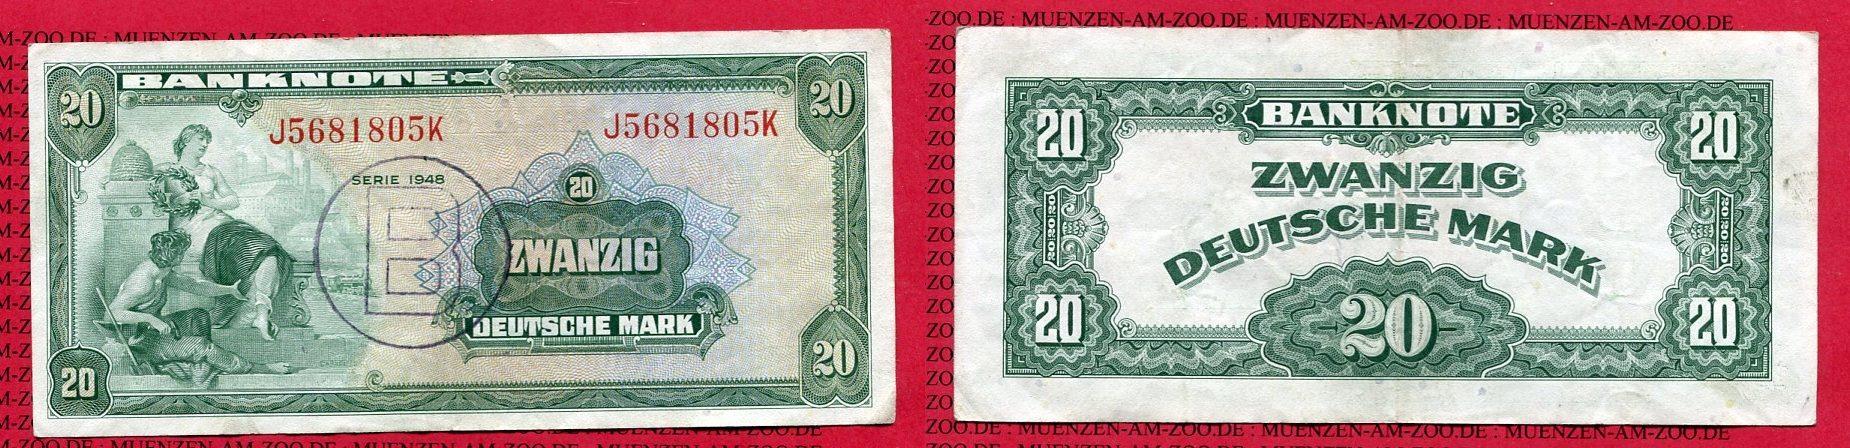 Foto Bundesrepublik Deutschland berlin 20 Dm Deutsche Mark Kopfgeld 1948